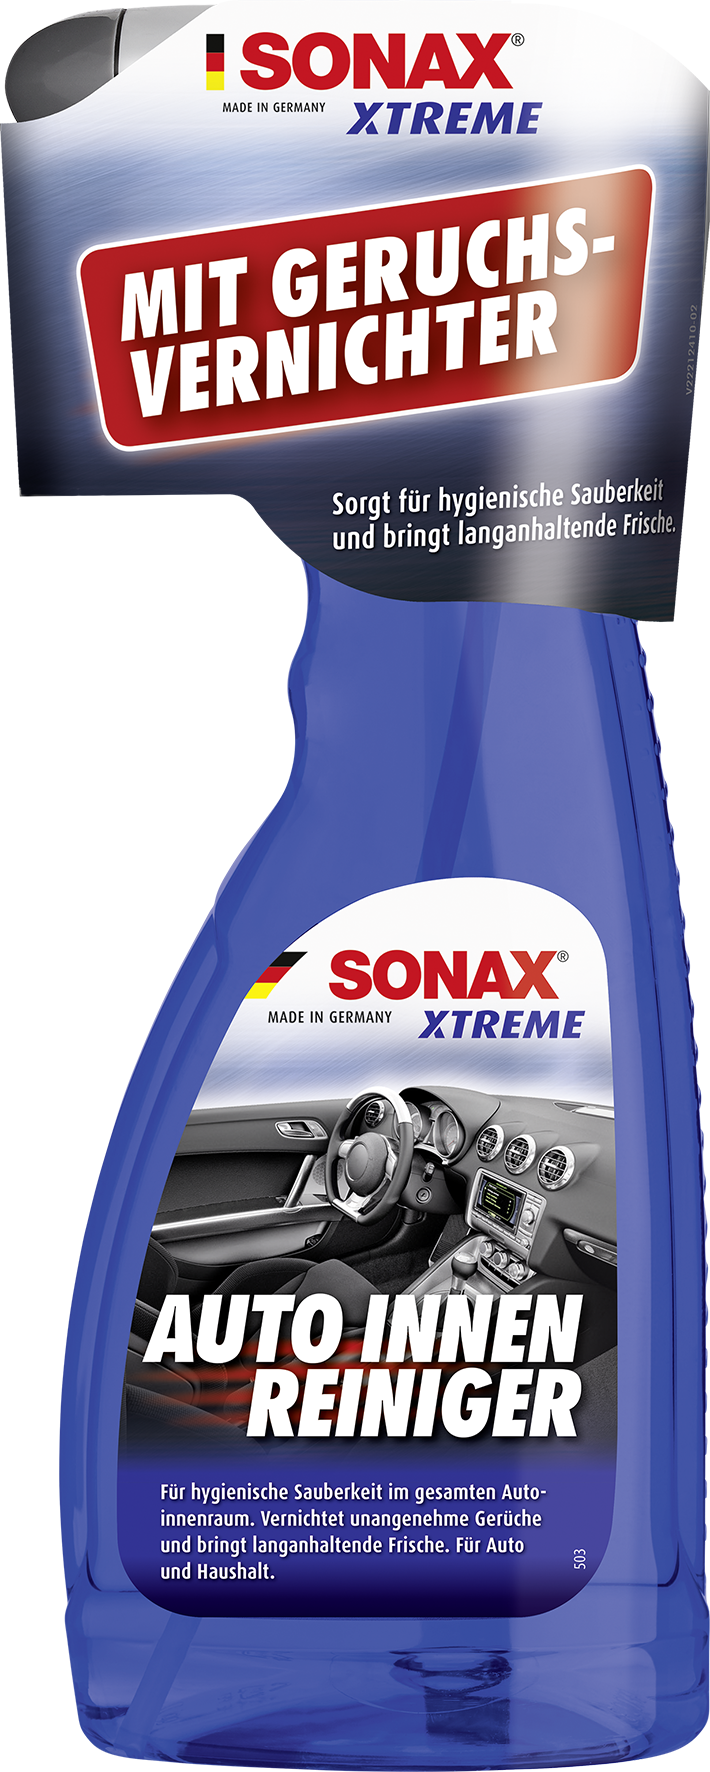 XTREME Car Interior Cleaner - Sonax Albania